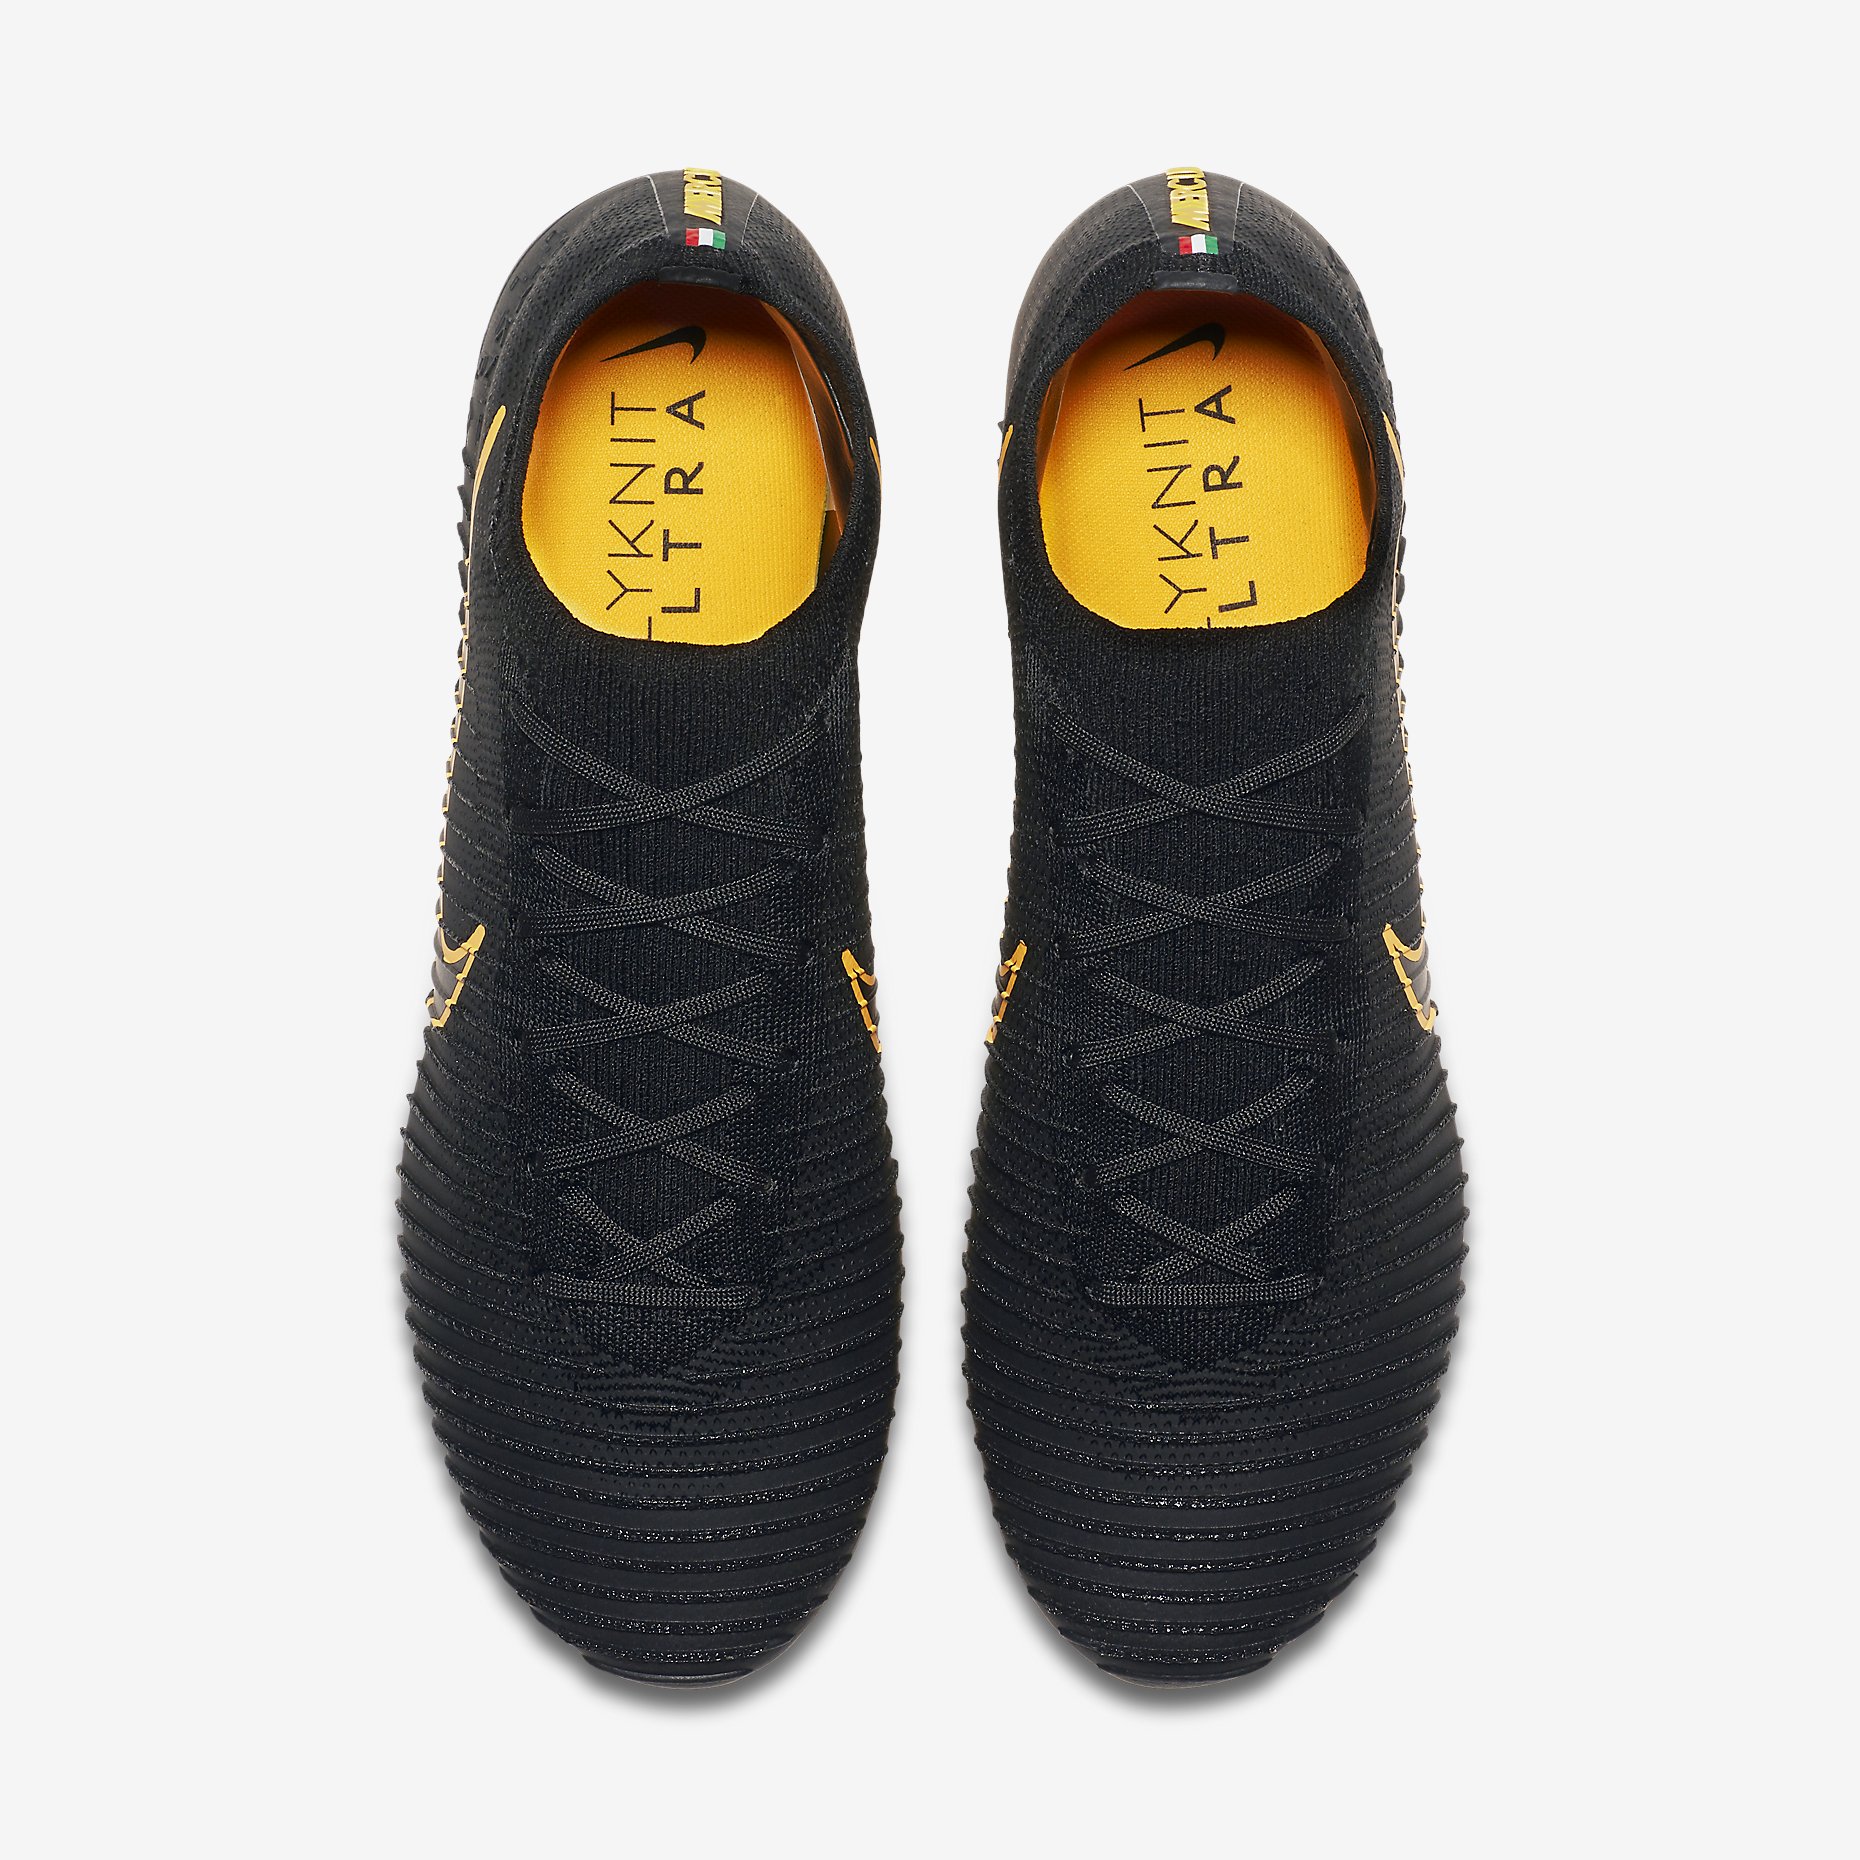 Sepatu Bola Soccer Nike Mercurial Vapor XI Laser Orange